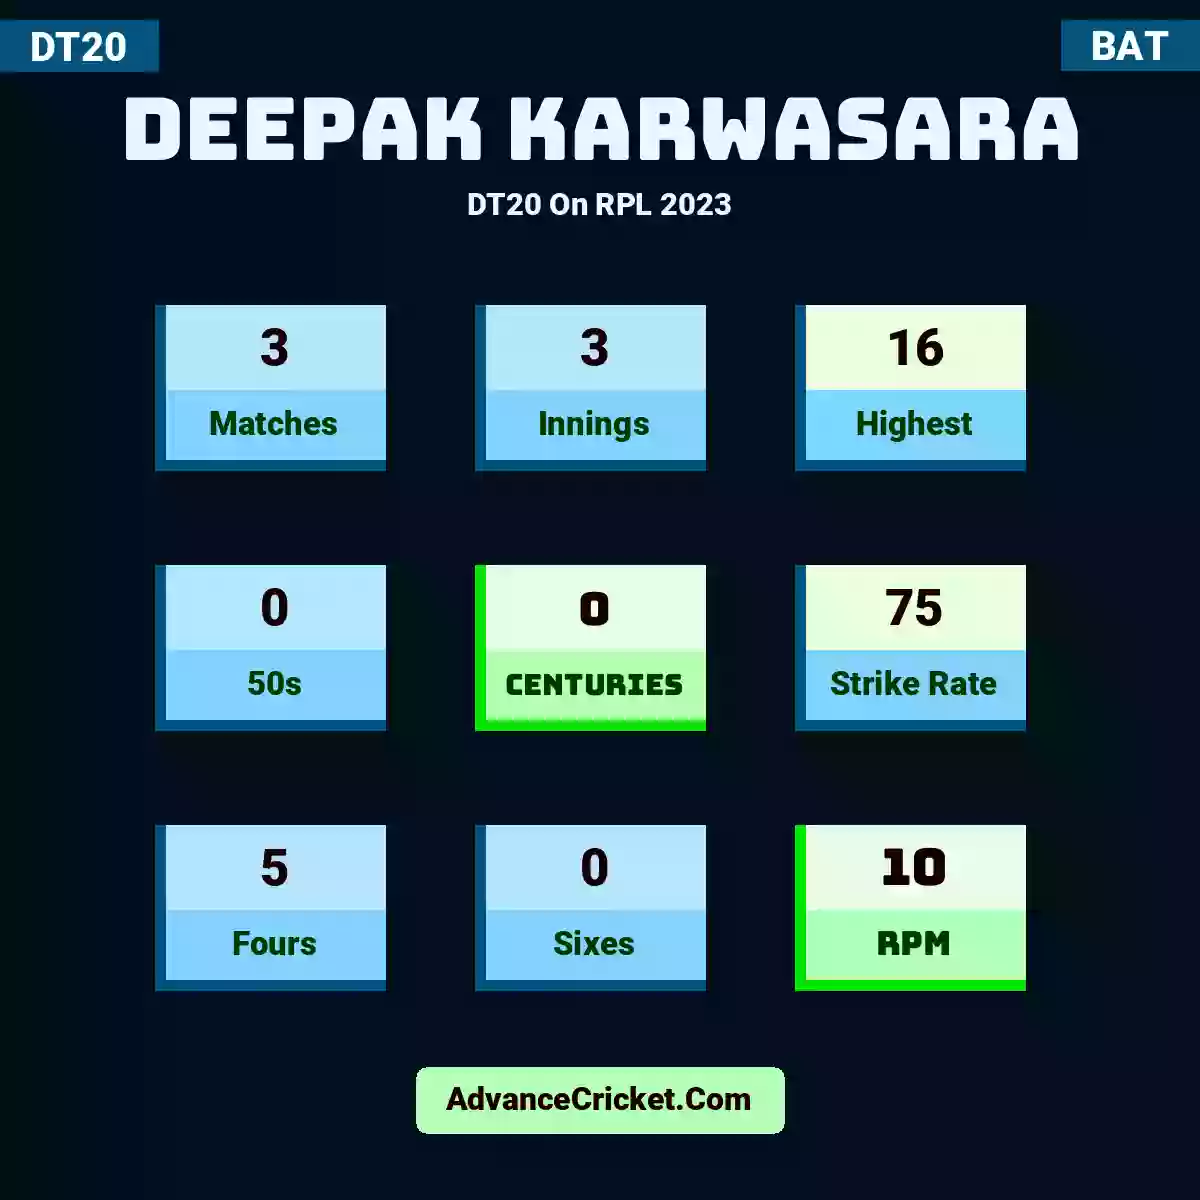 Deepak Karwasara DT20  On RPL 2023, Deepak Karwasara played 3 matches, scored 16 runs as highest, 0 half-centuries, and 0 centuries, with a strike rate of 75. D.Karwasara hit 5 fours and 0 sixes, with an RPM of 10.